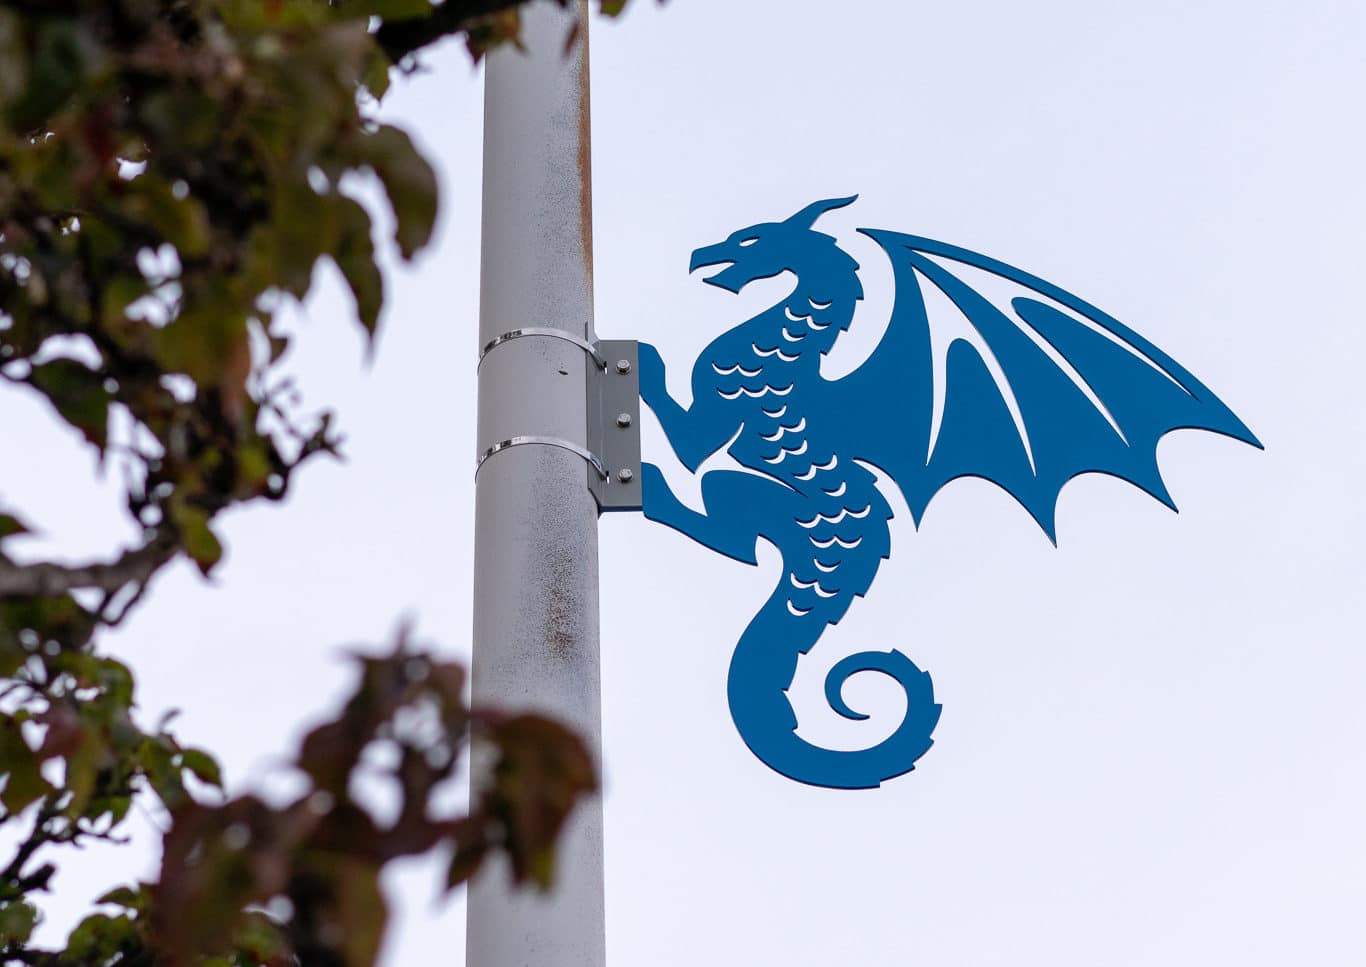 Blue metal dragon sculpture on a light pole in downtown Renton